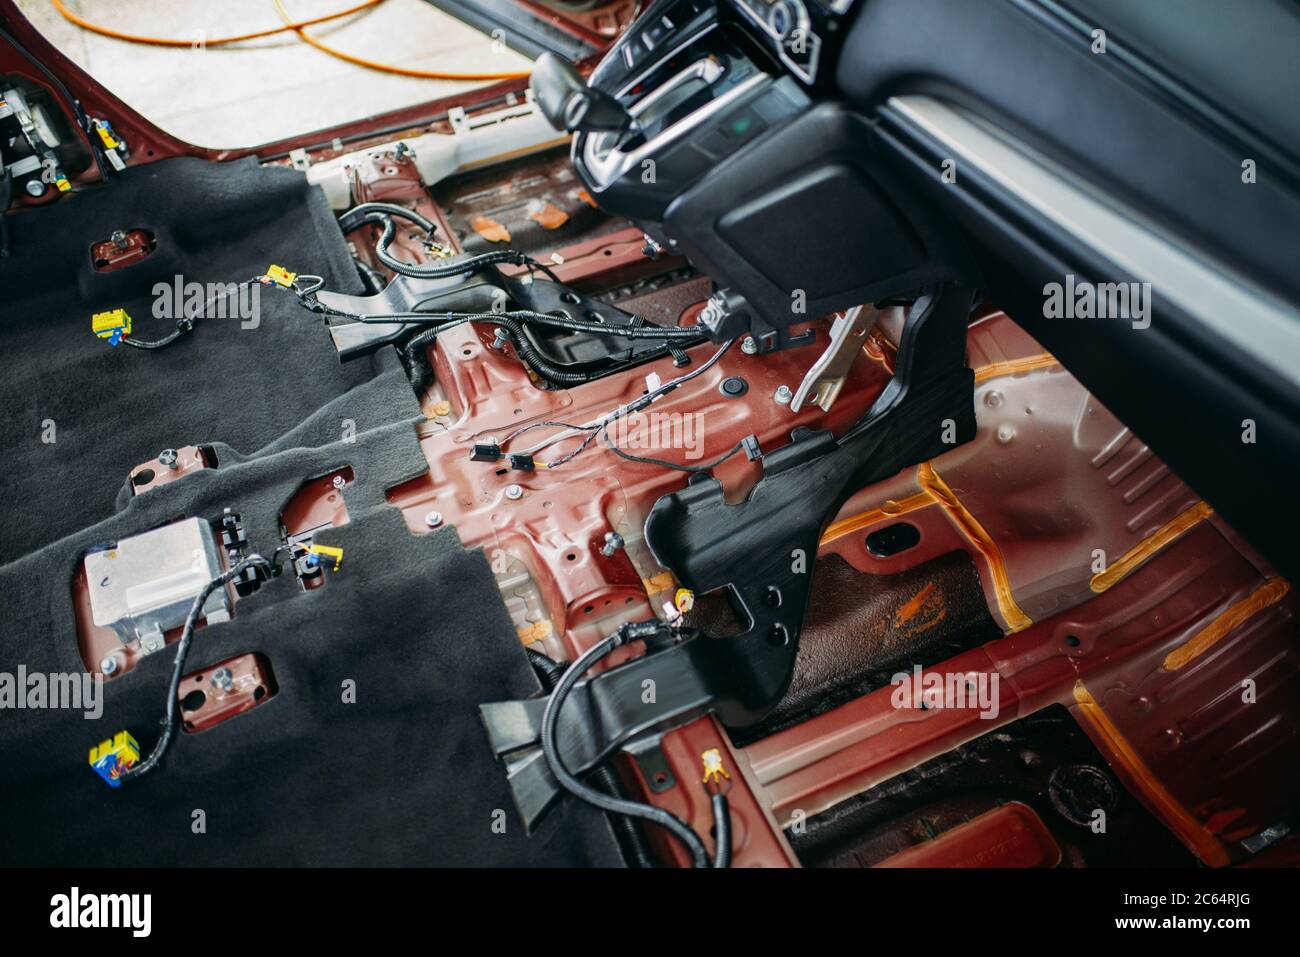 Tief Auto Tuning, demontiert Fahrzeug Innenraum Stockfotografie - Alamy